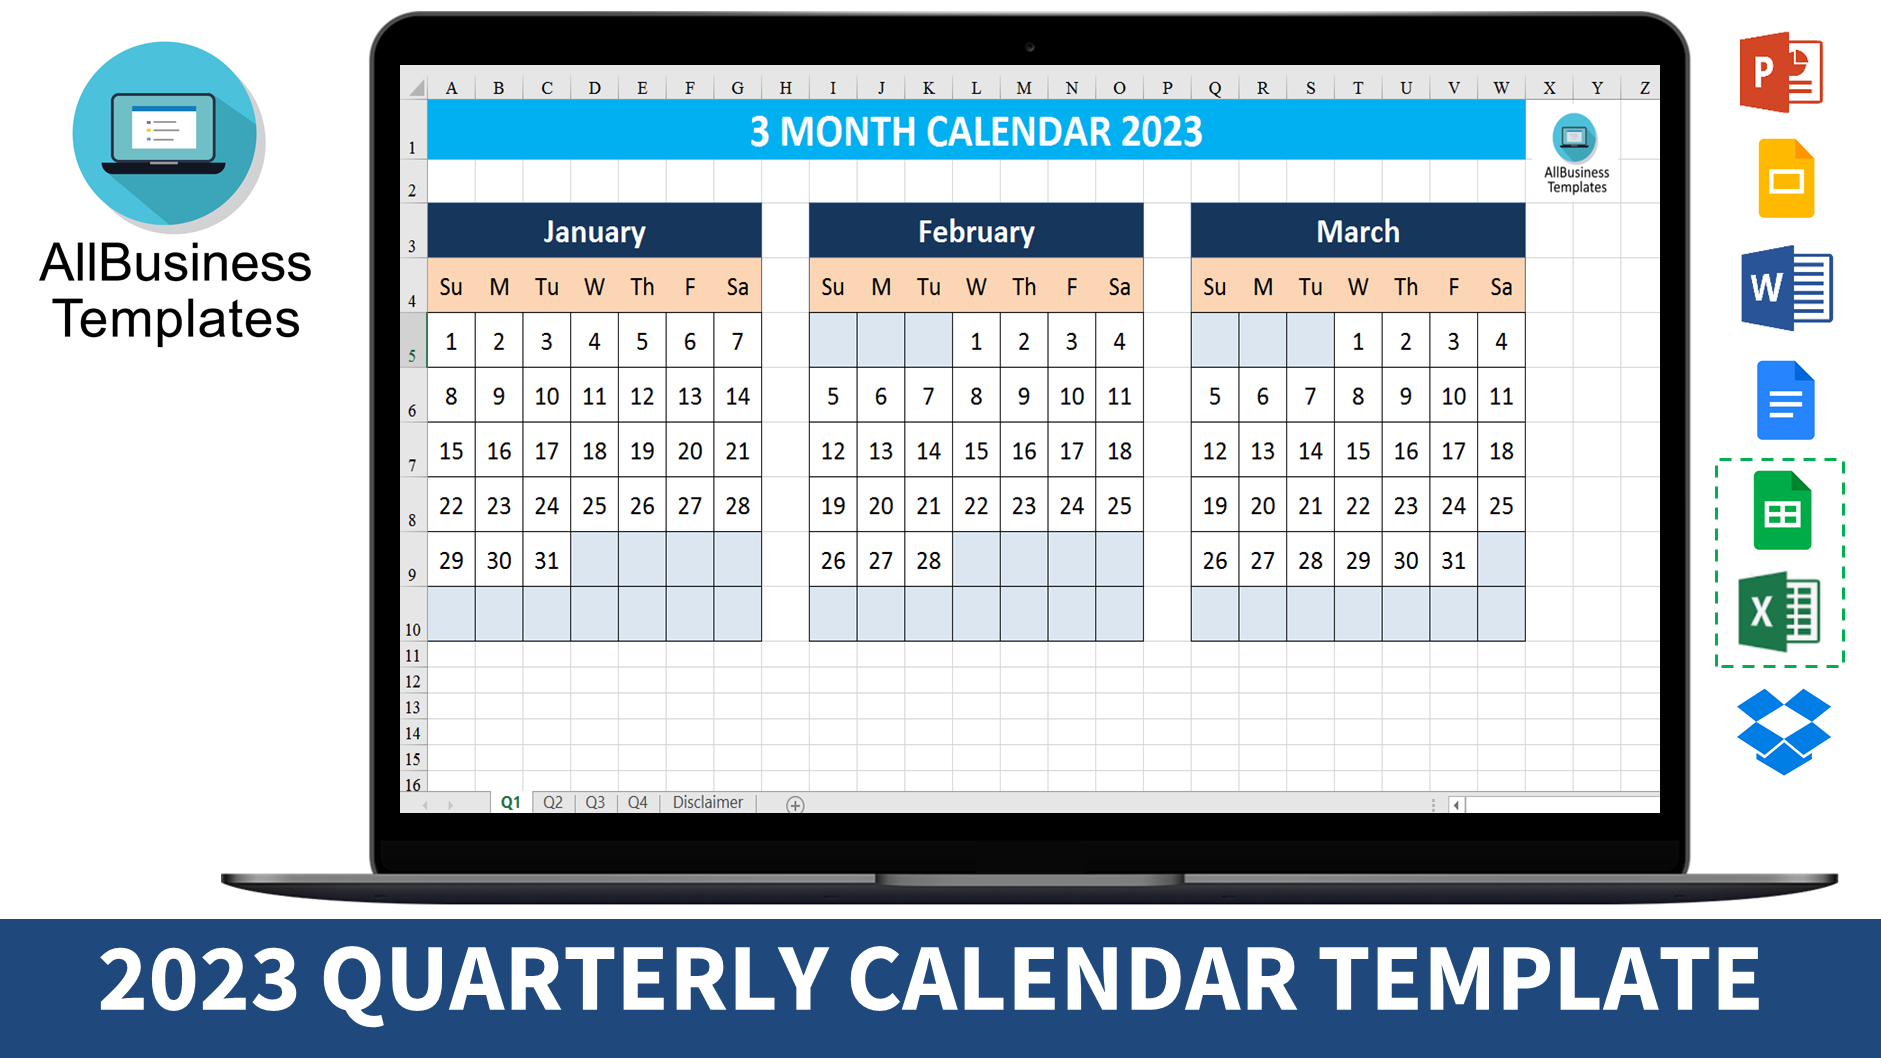 3 month calendar 2023 plantilla imagen principal